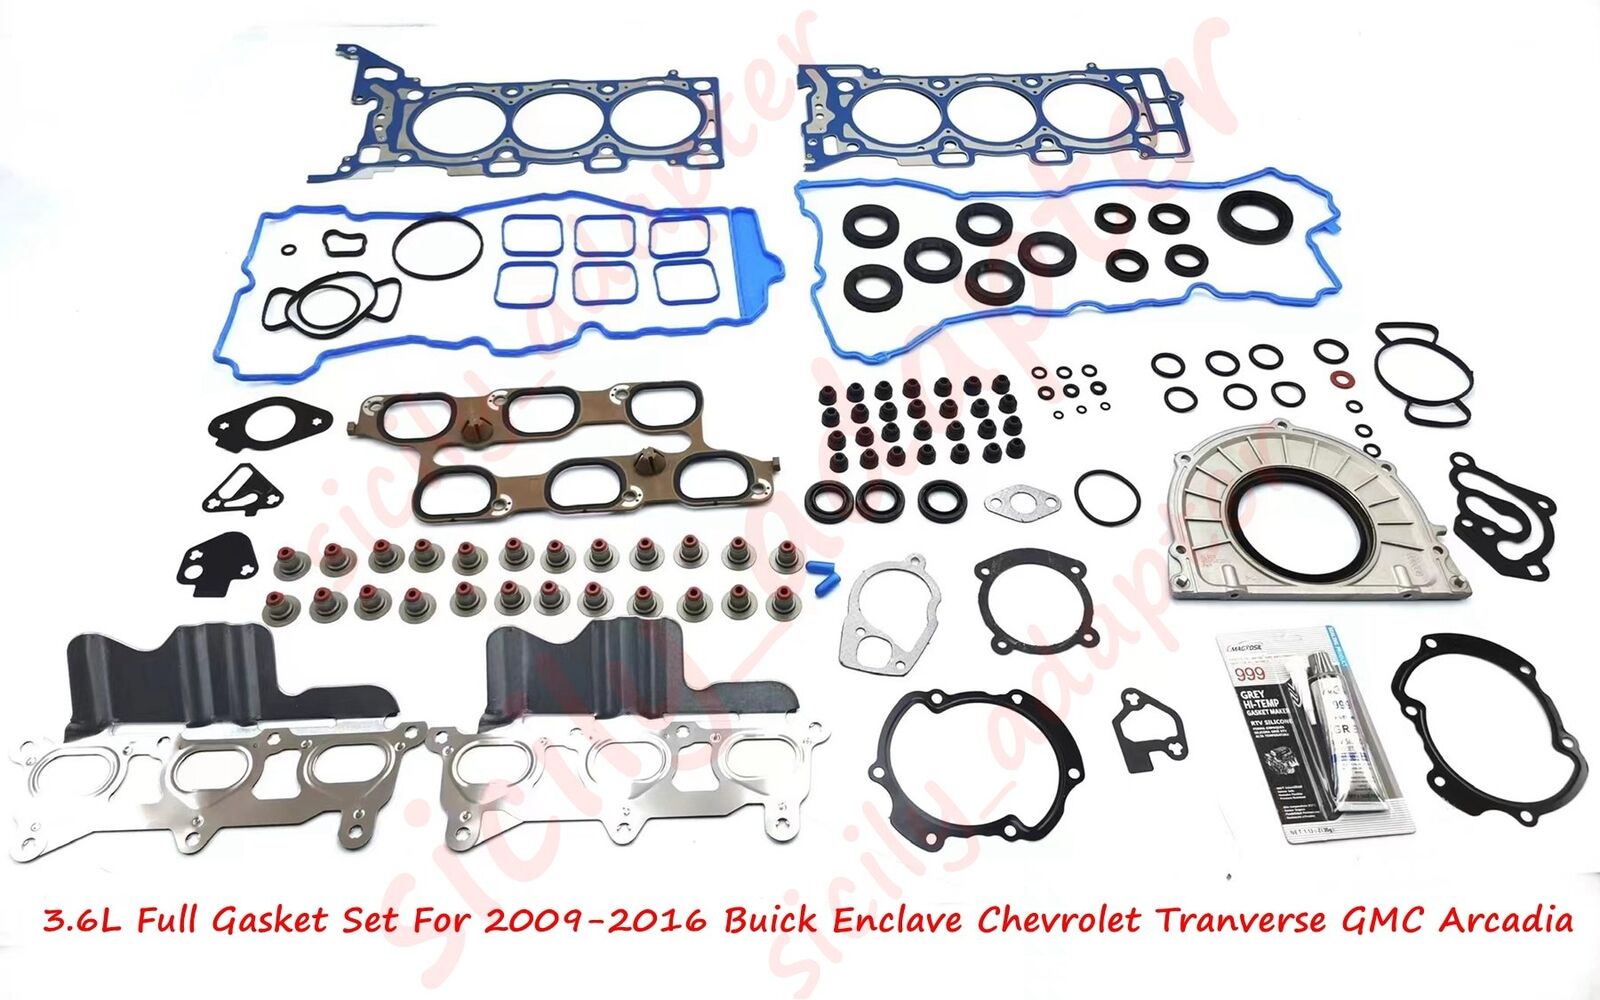 3.6L Full Gasket Set For 2009-2016 Buick Enclave Chevrolet Tranverse GMC Arcadia